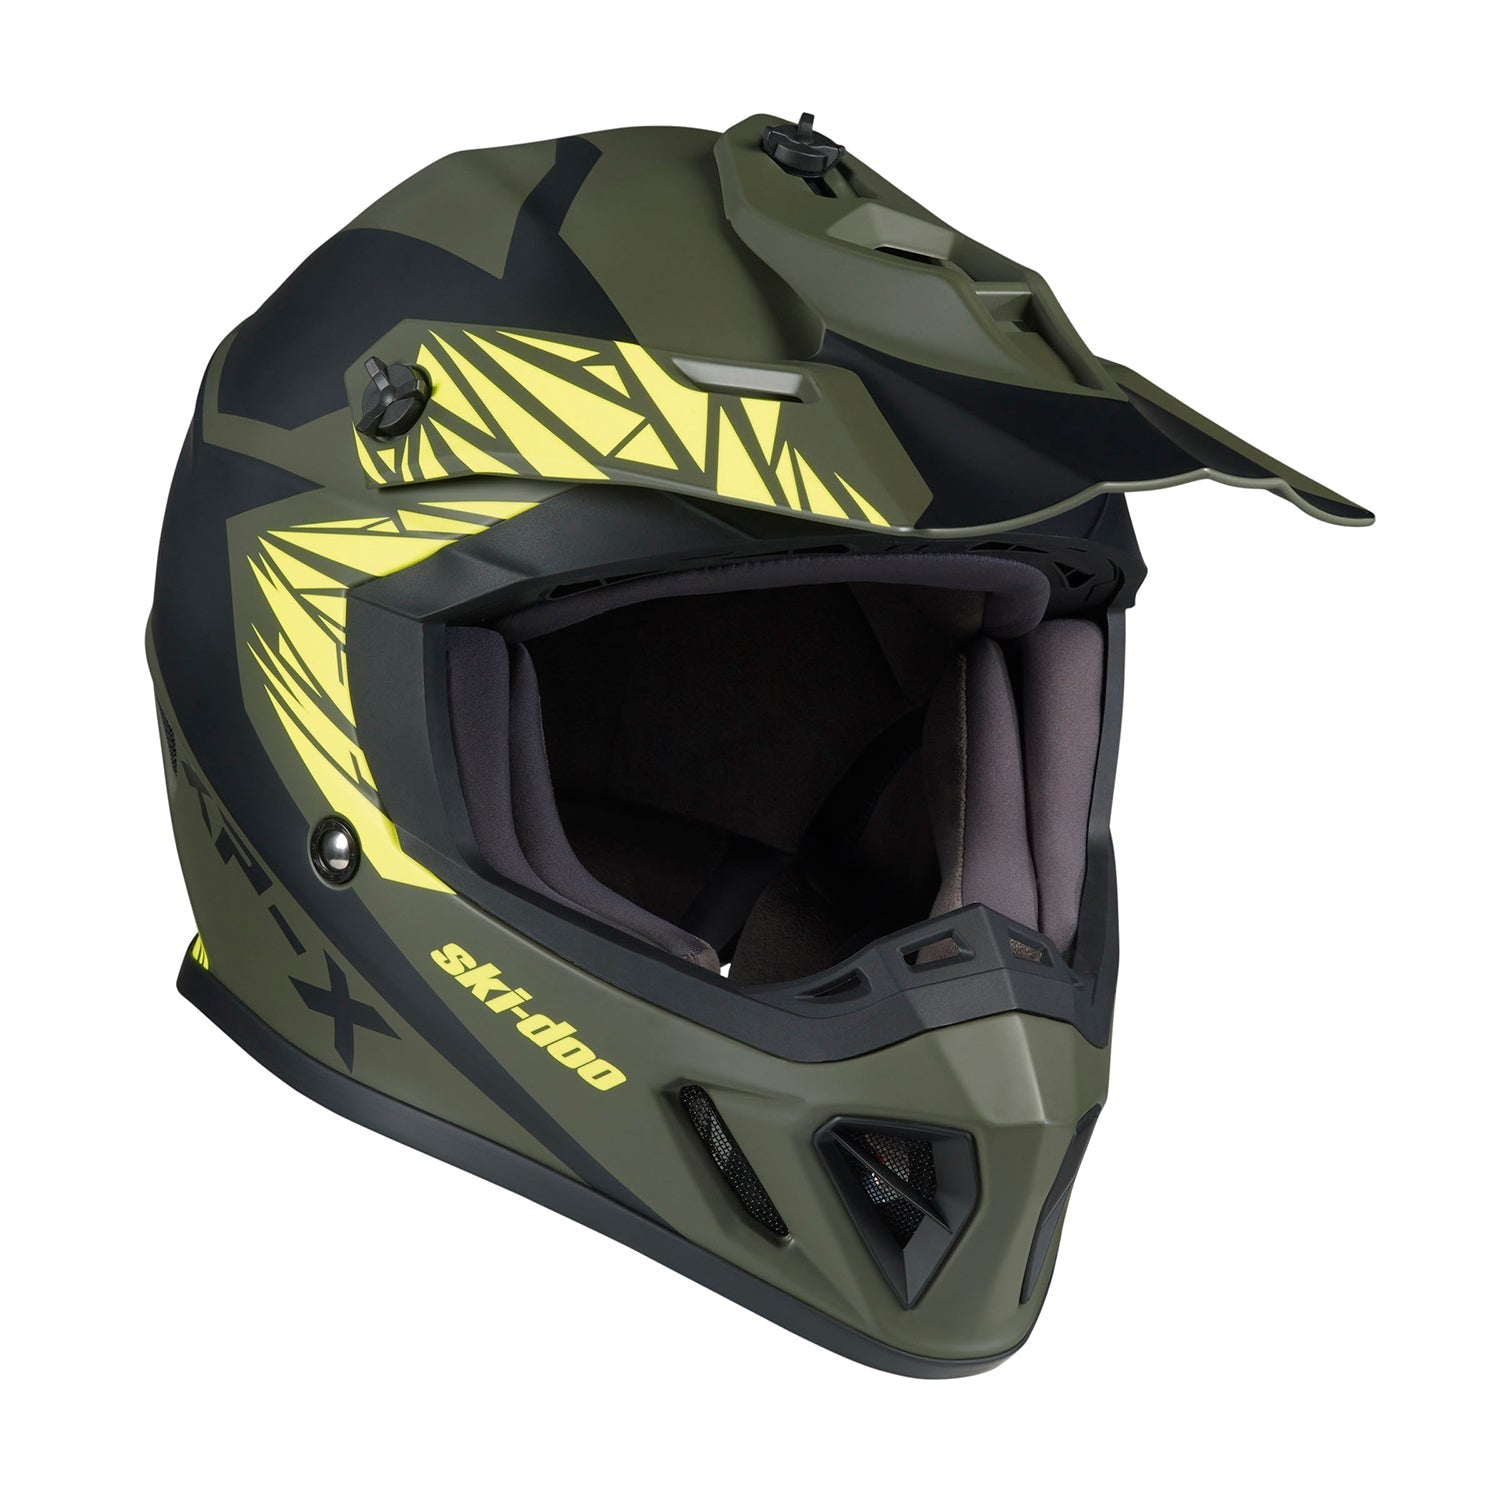 Ski-Doo XP-X Peak Helmet (DOT/ECE) (Non-Current)